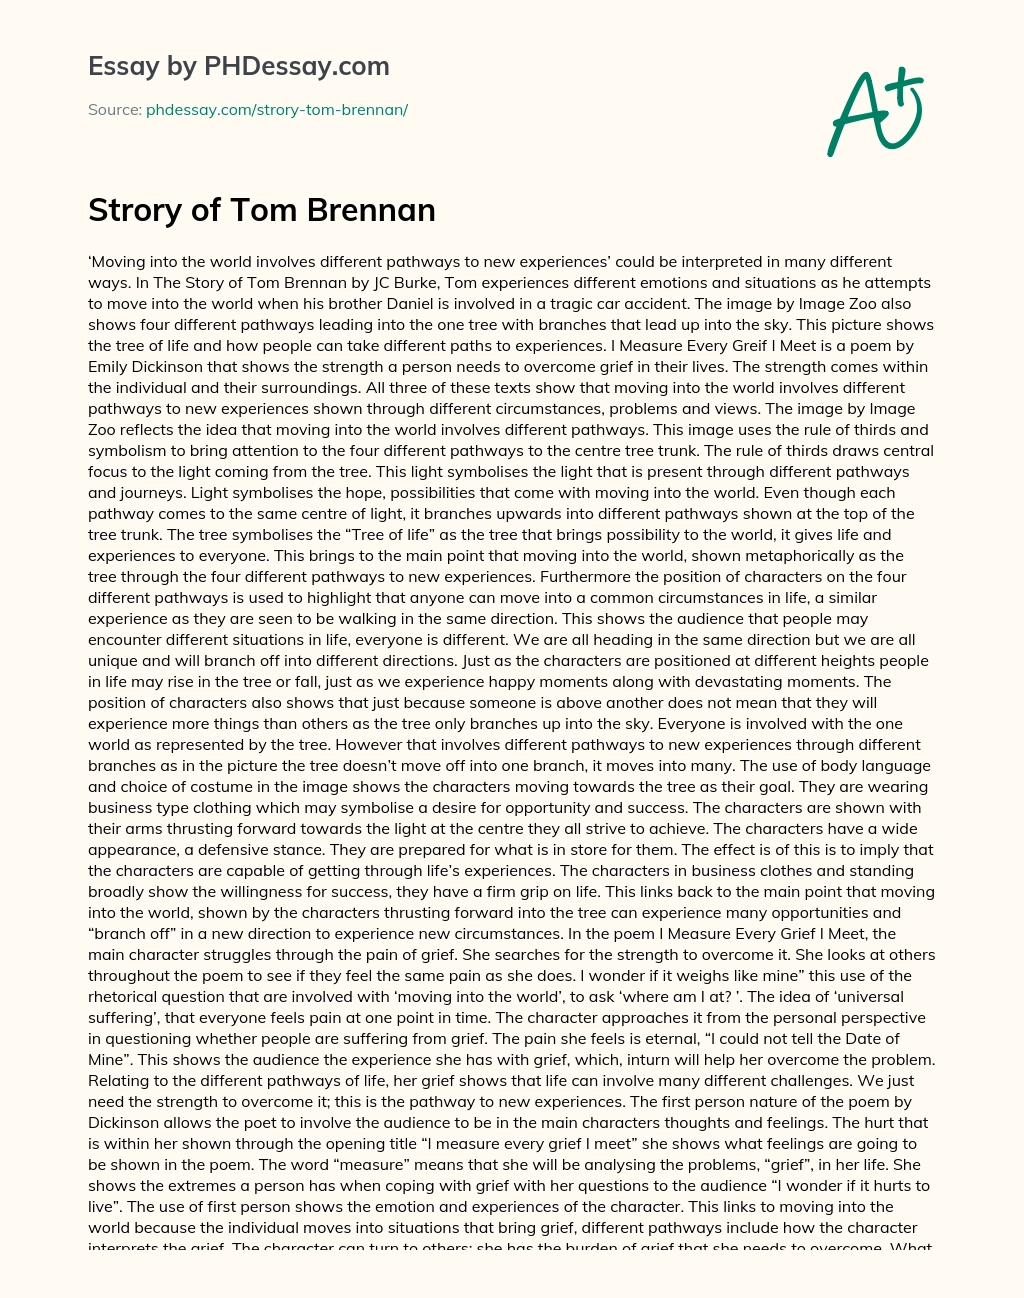 Strory of Tom Brennan essay